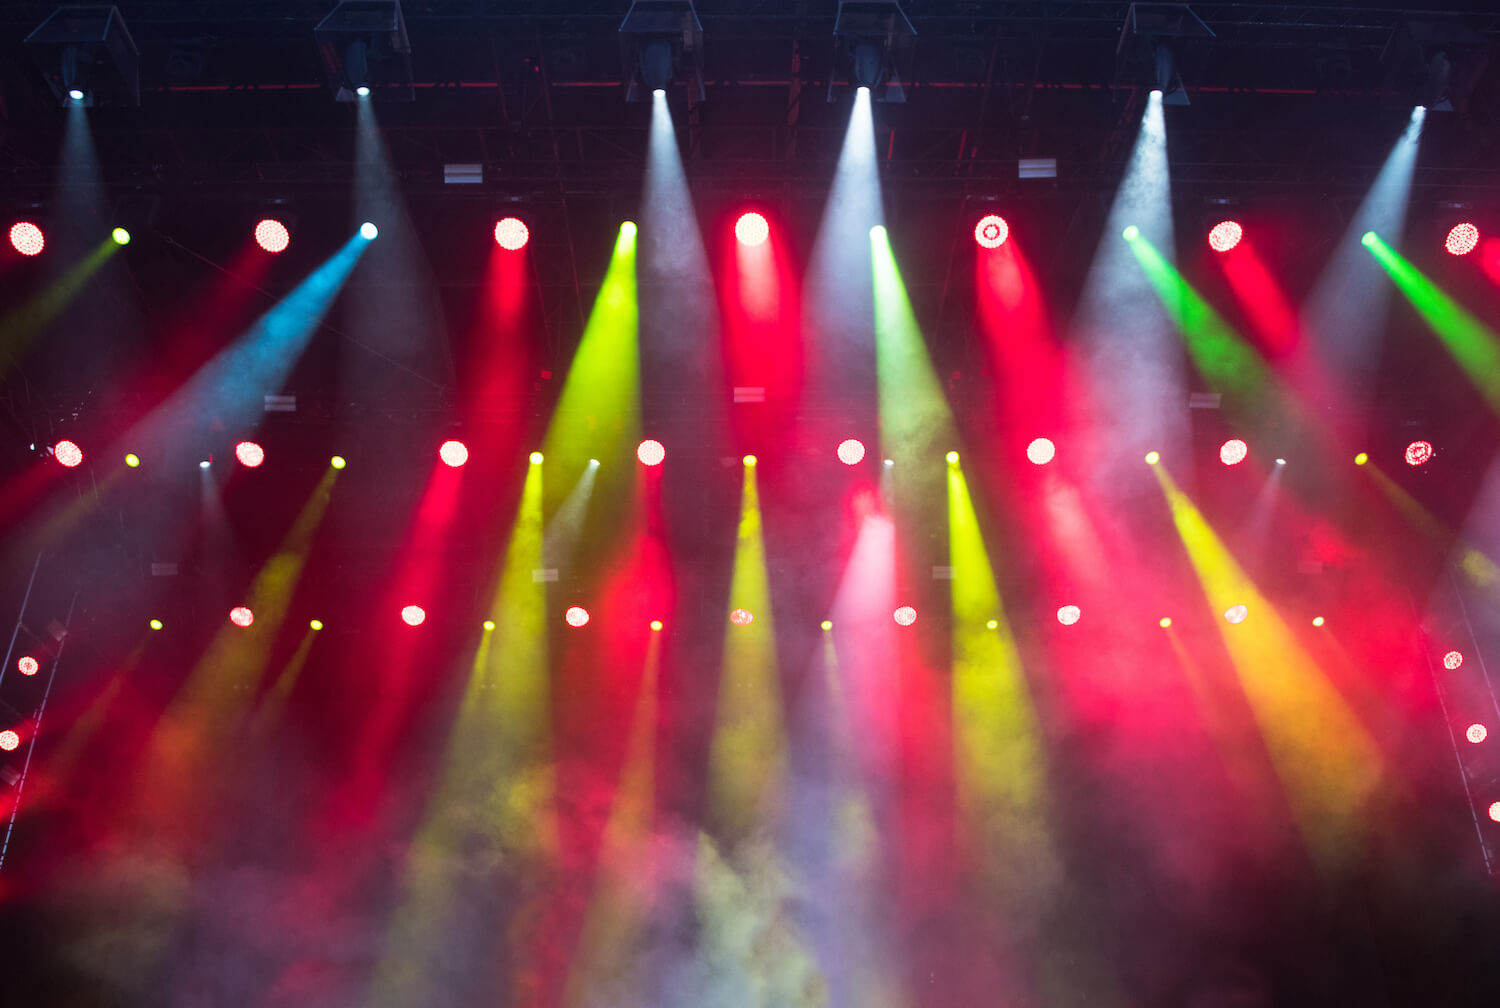 Stage lights background image